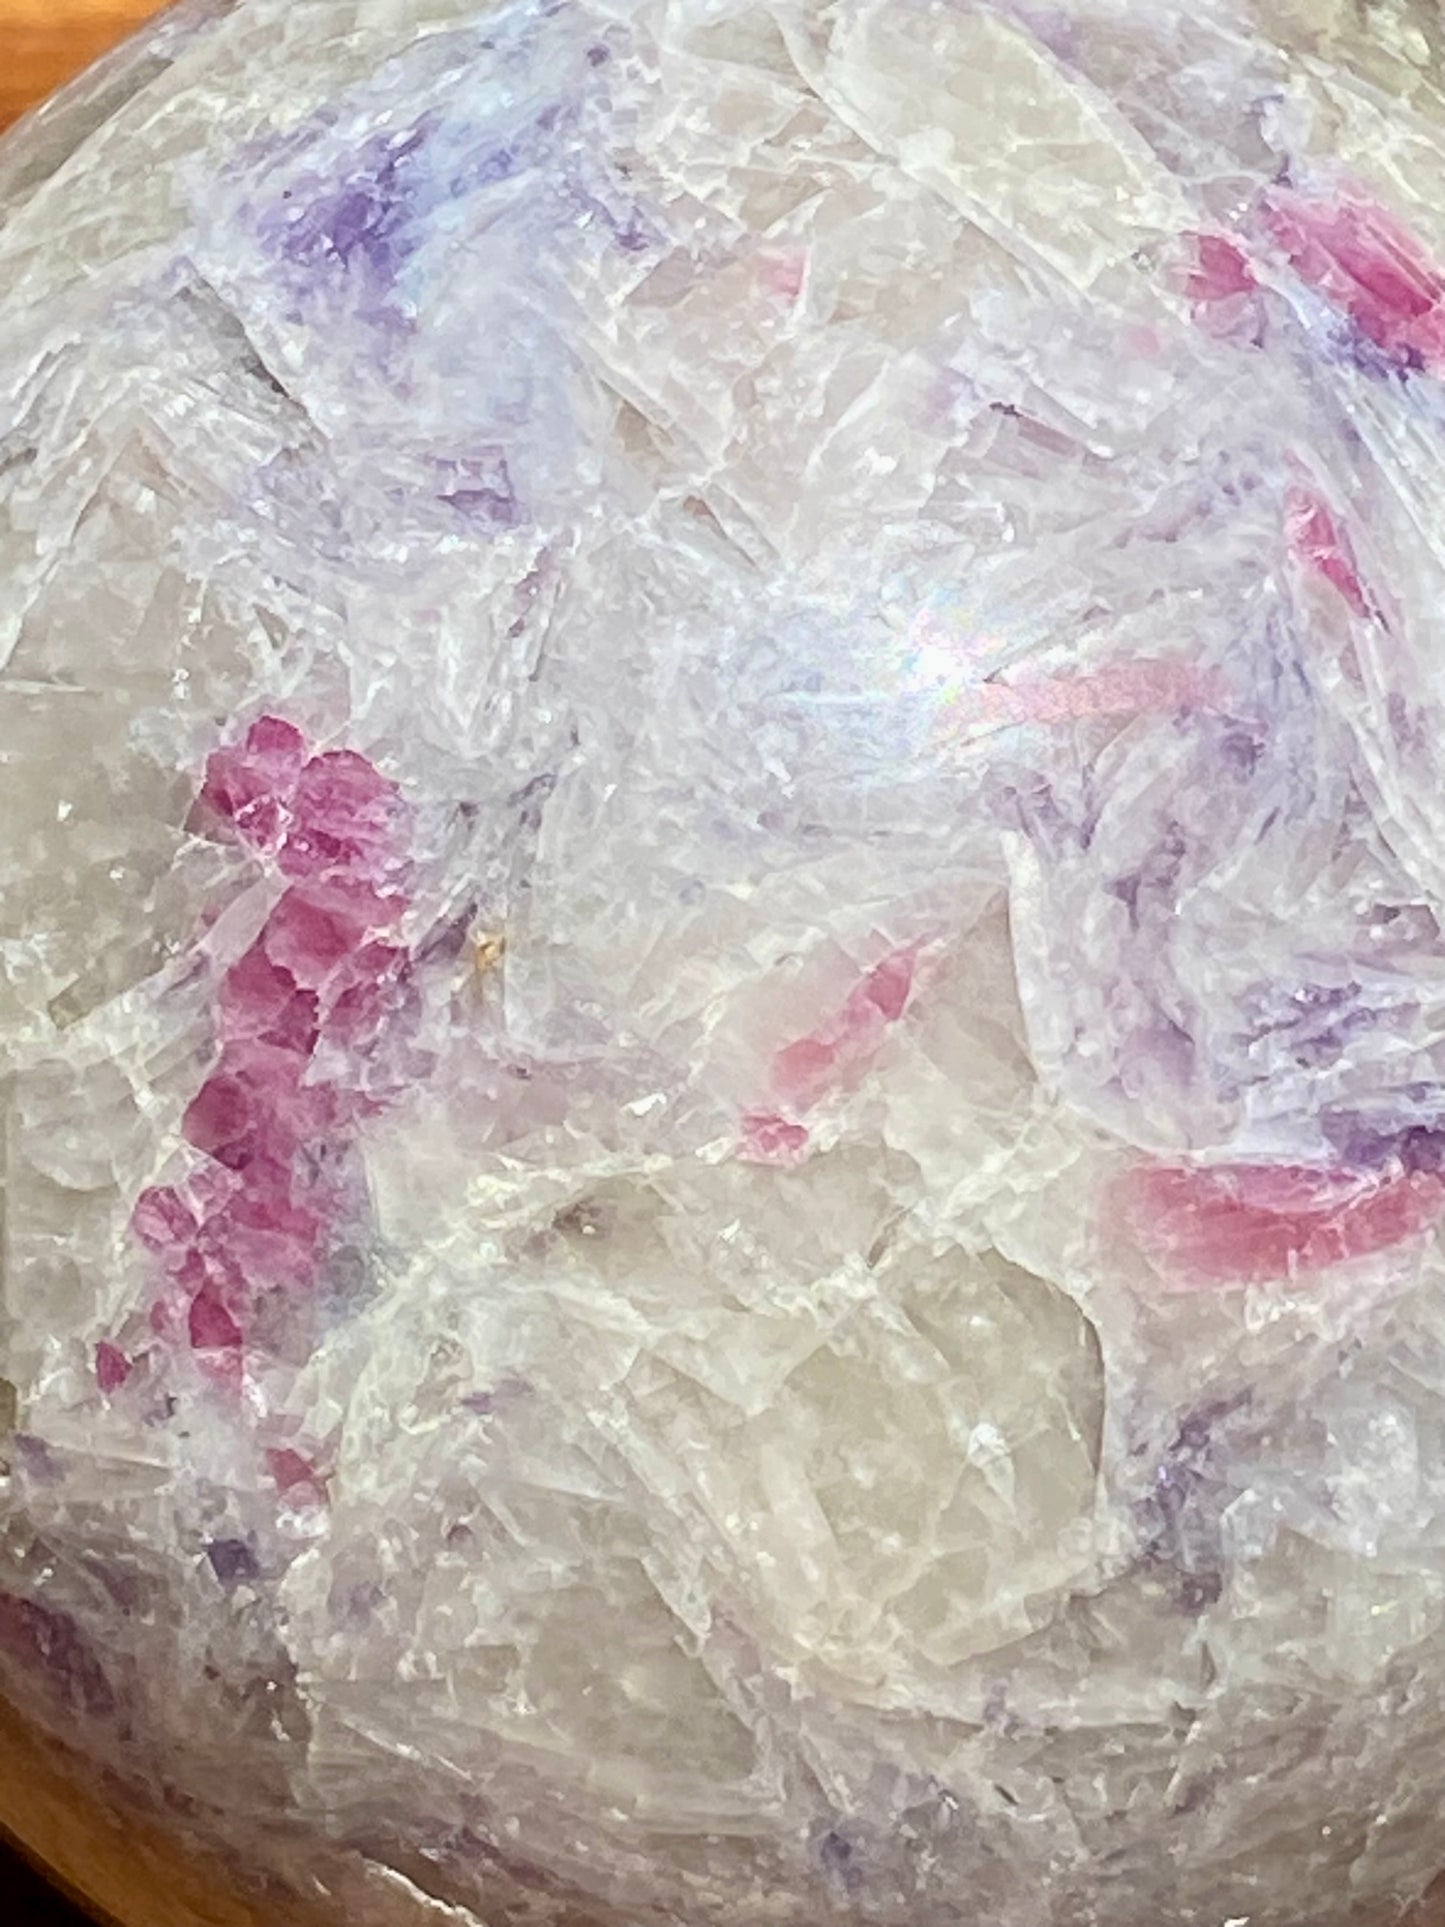 Pegamite Sphere with Lepidolite & Pink Tourmaline